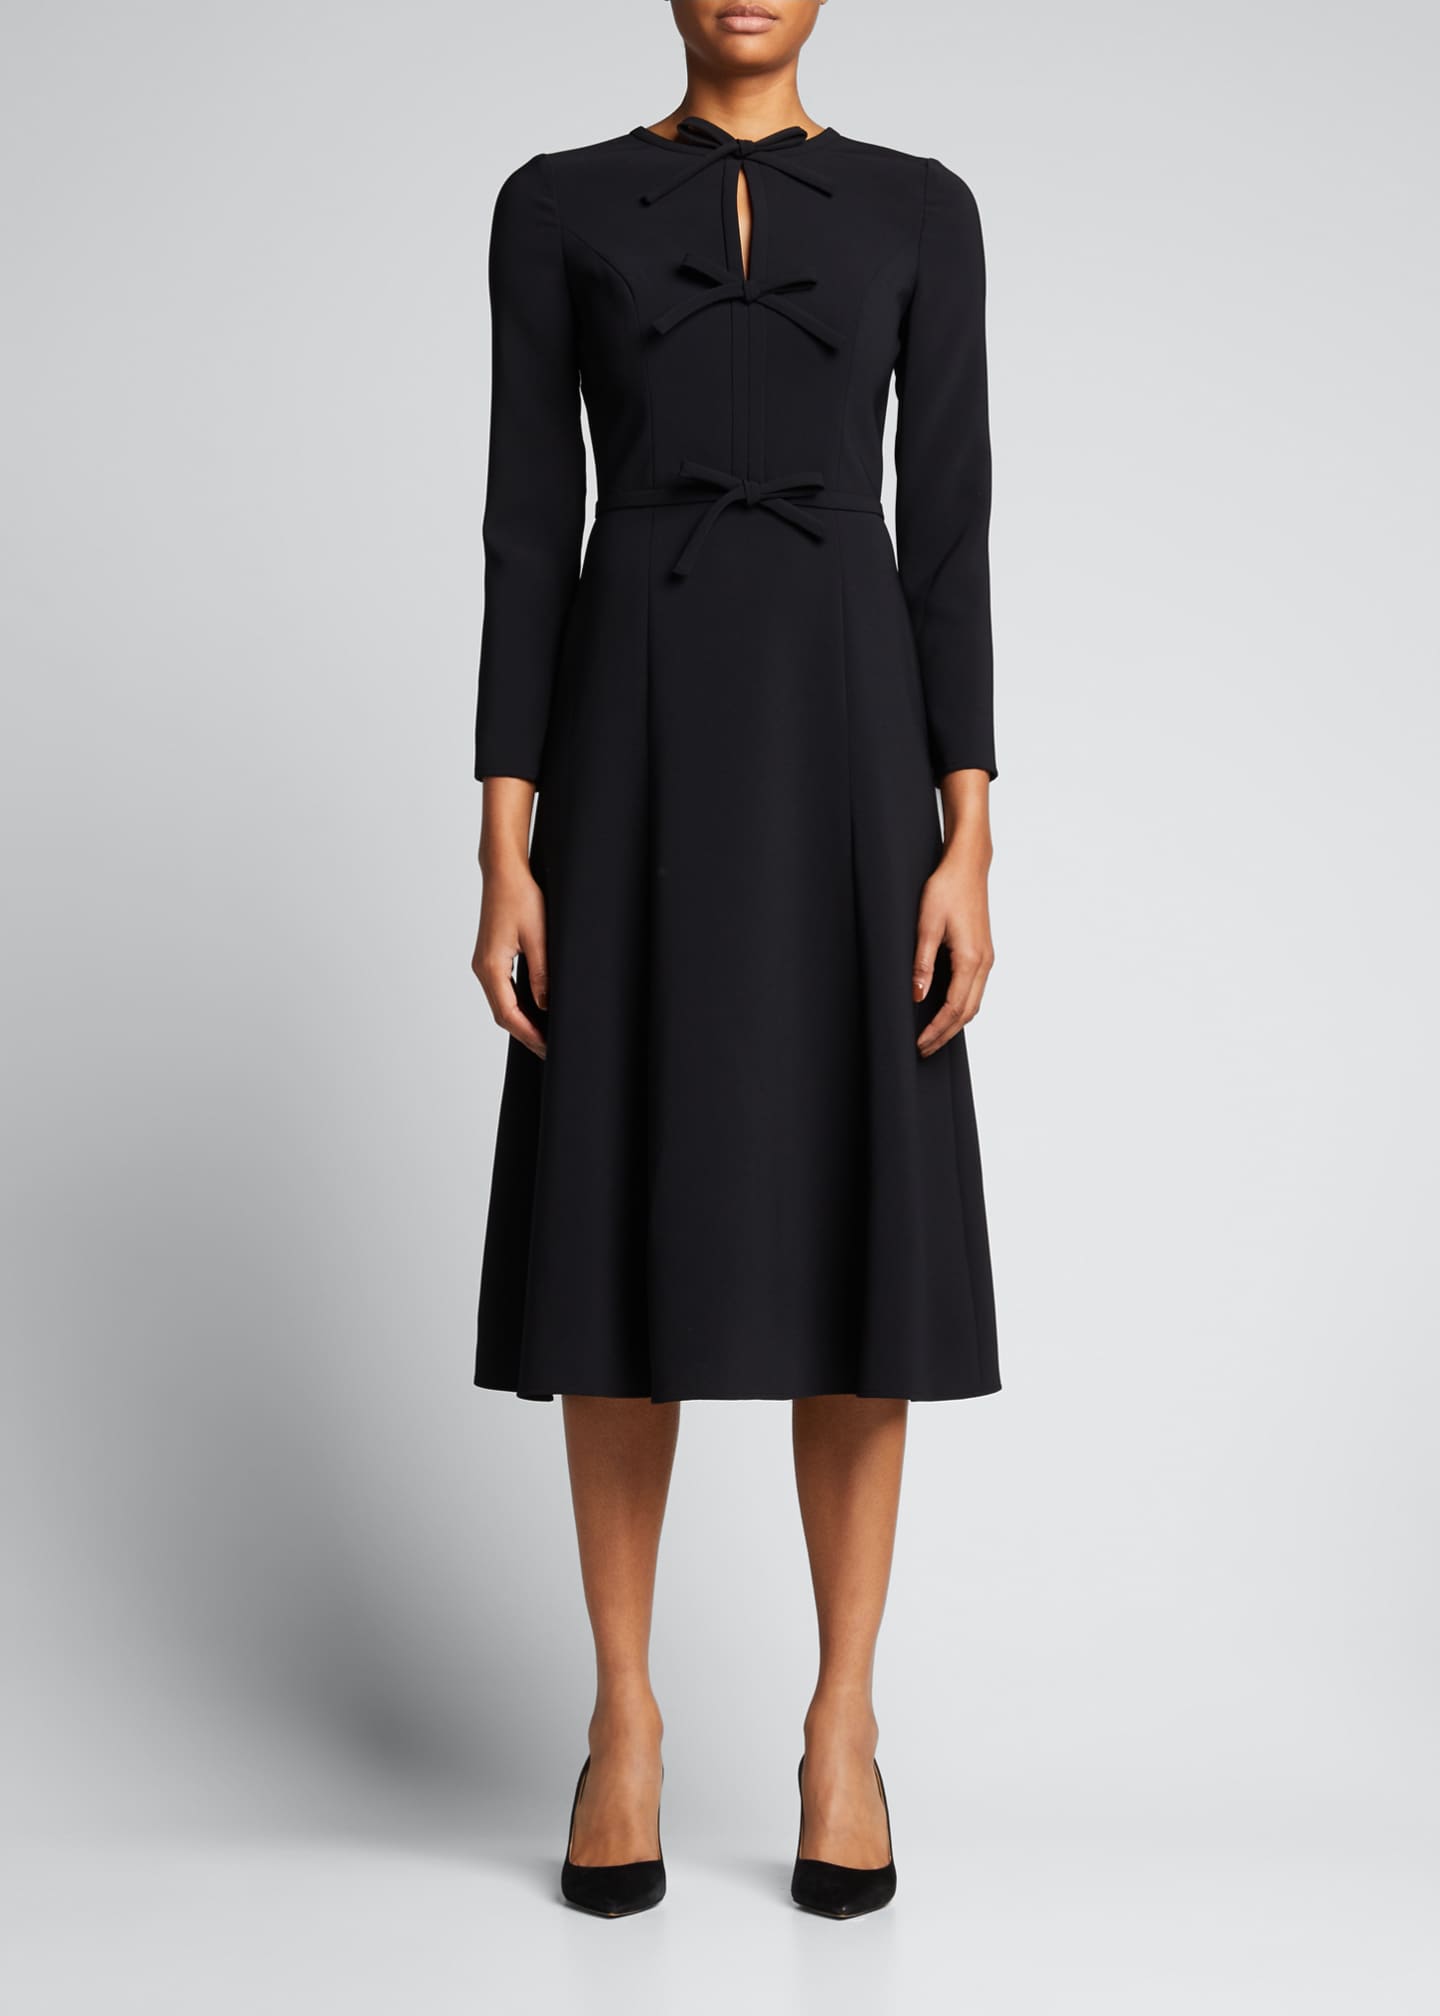 Carolina Herrera Bow Midi Dress - Bergdorf Goodman